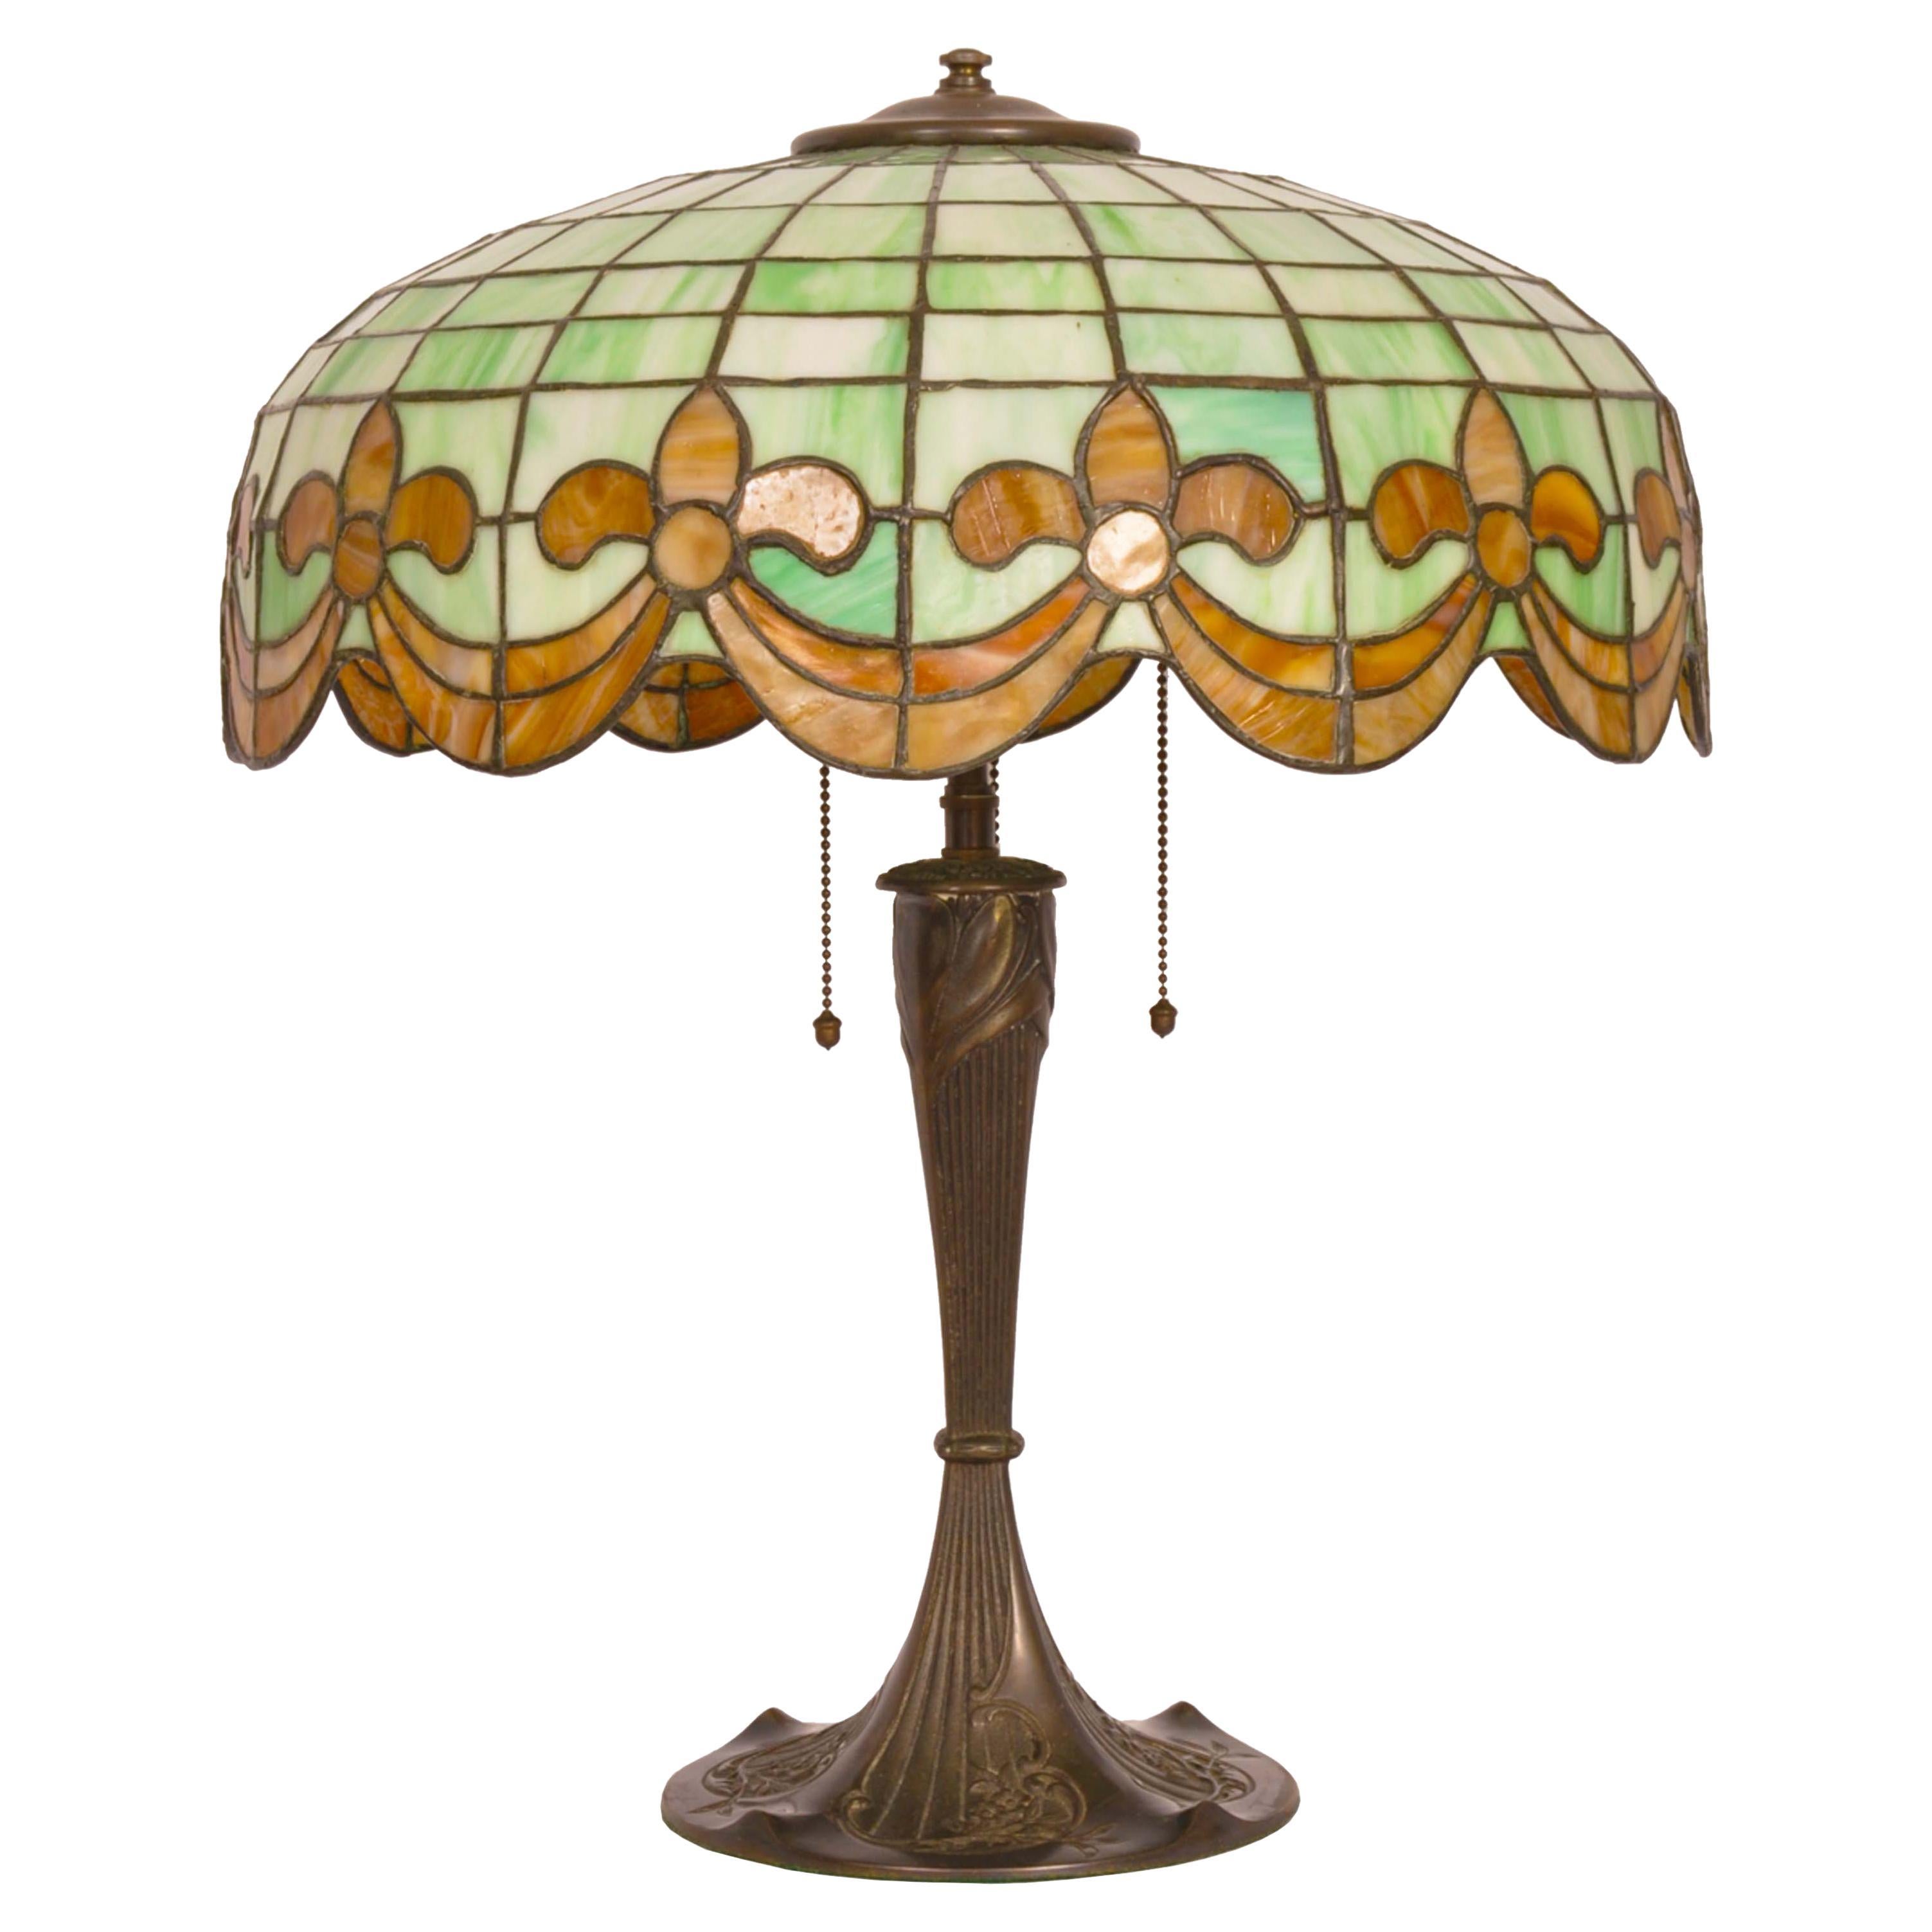 Antique American Art Nouveau Bronze & Leaded Glass Table Lamp by Wilkinson, 1910